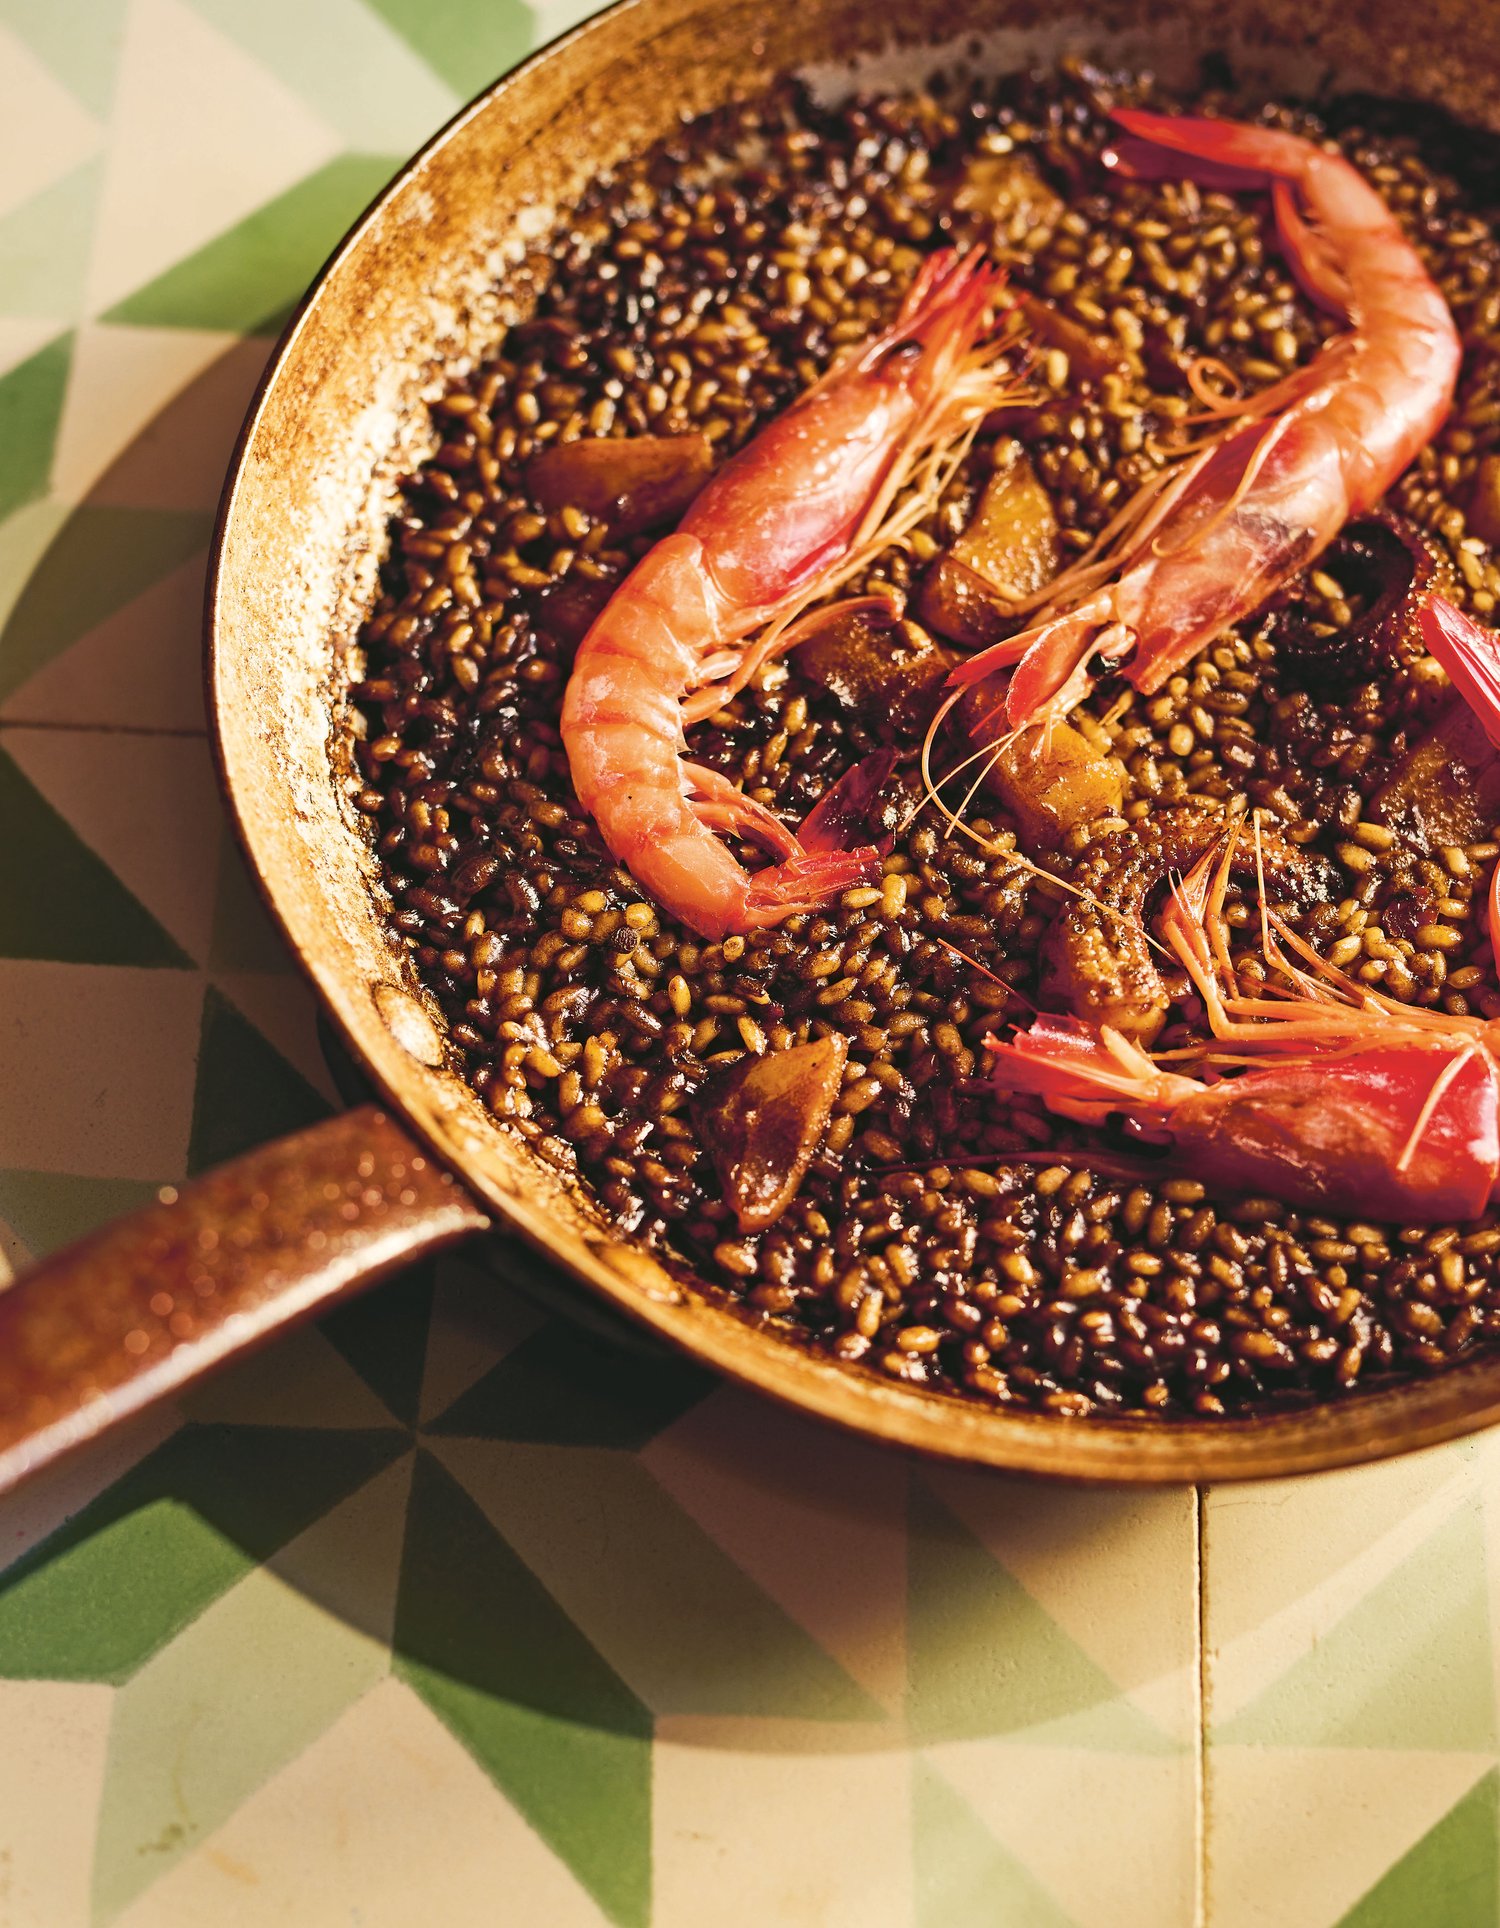 Paella kit — Omar Allibhoy - The Spanish Chef